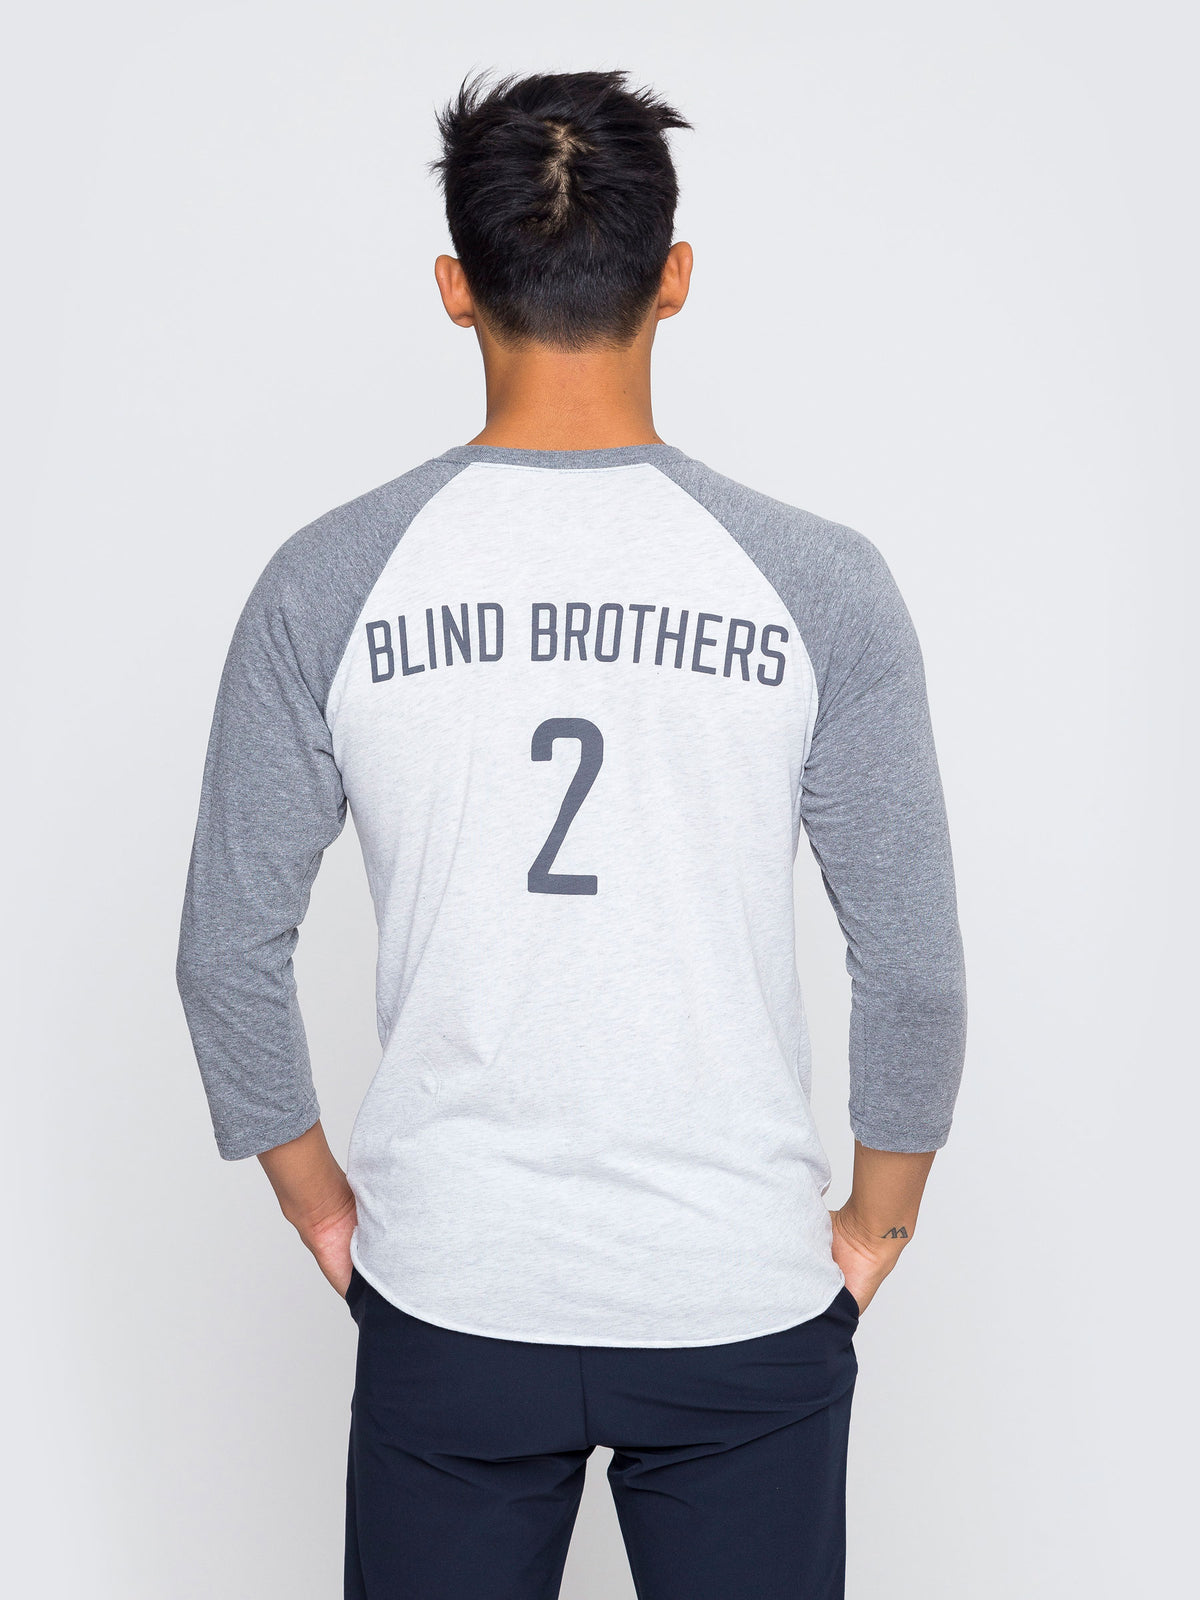 Two Blind Brothers Baseball Graphic Raglan, Size XXL, Grey